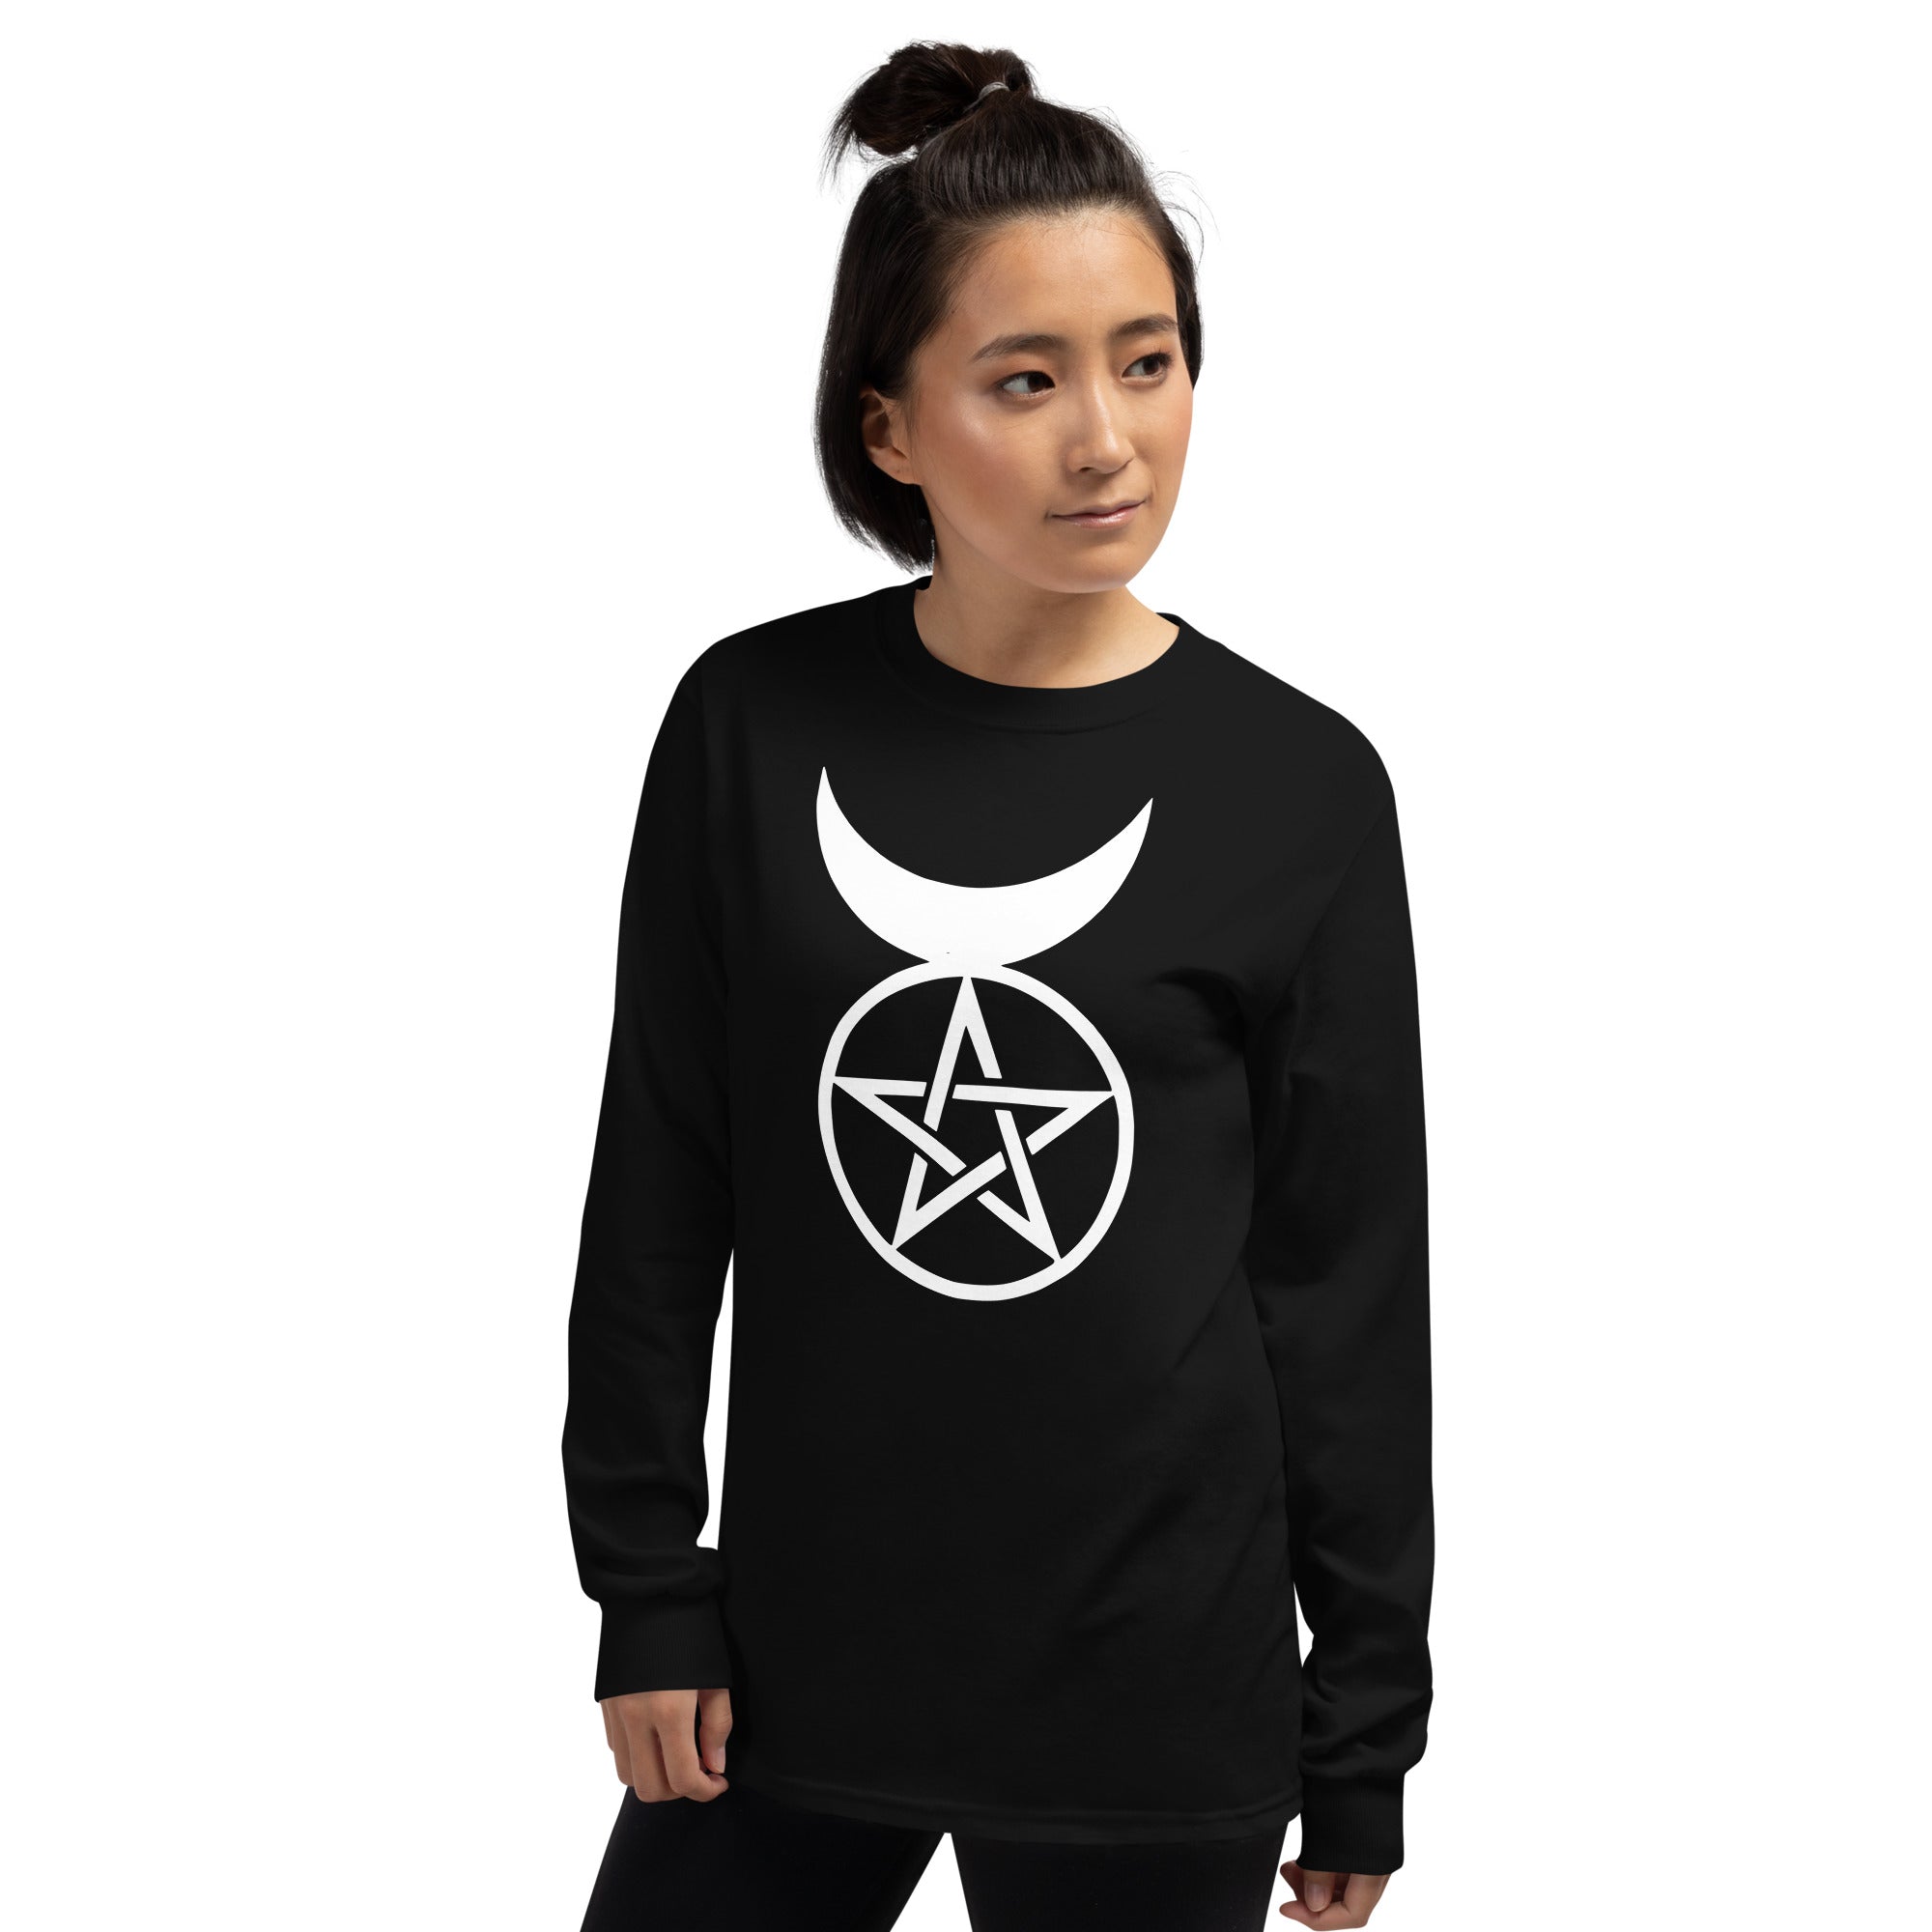 The Horned God Wicca Neopaganism Symbol Long Sleeve Shirt